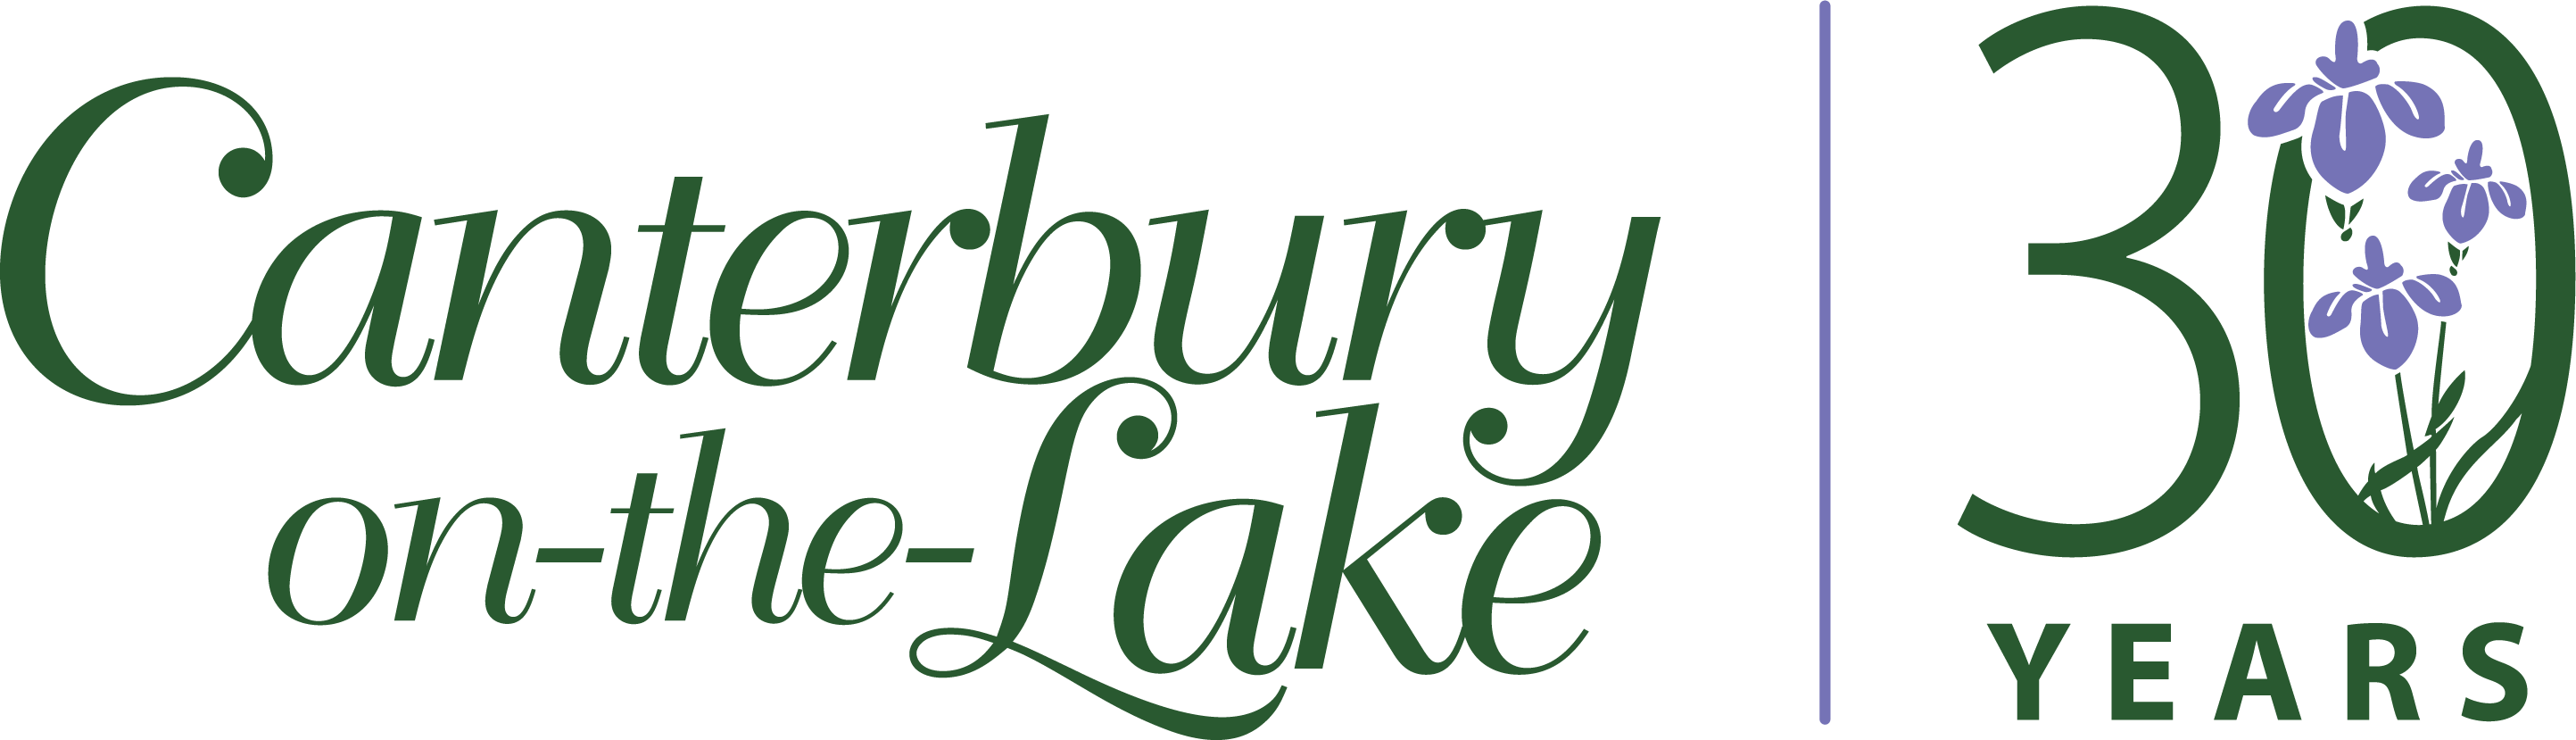 Canterbury-on-the-Lake Logo